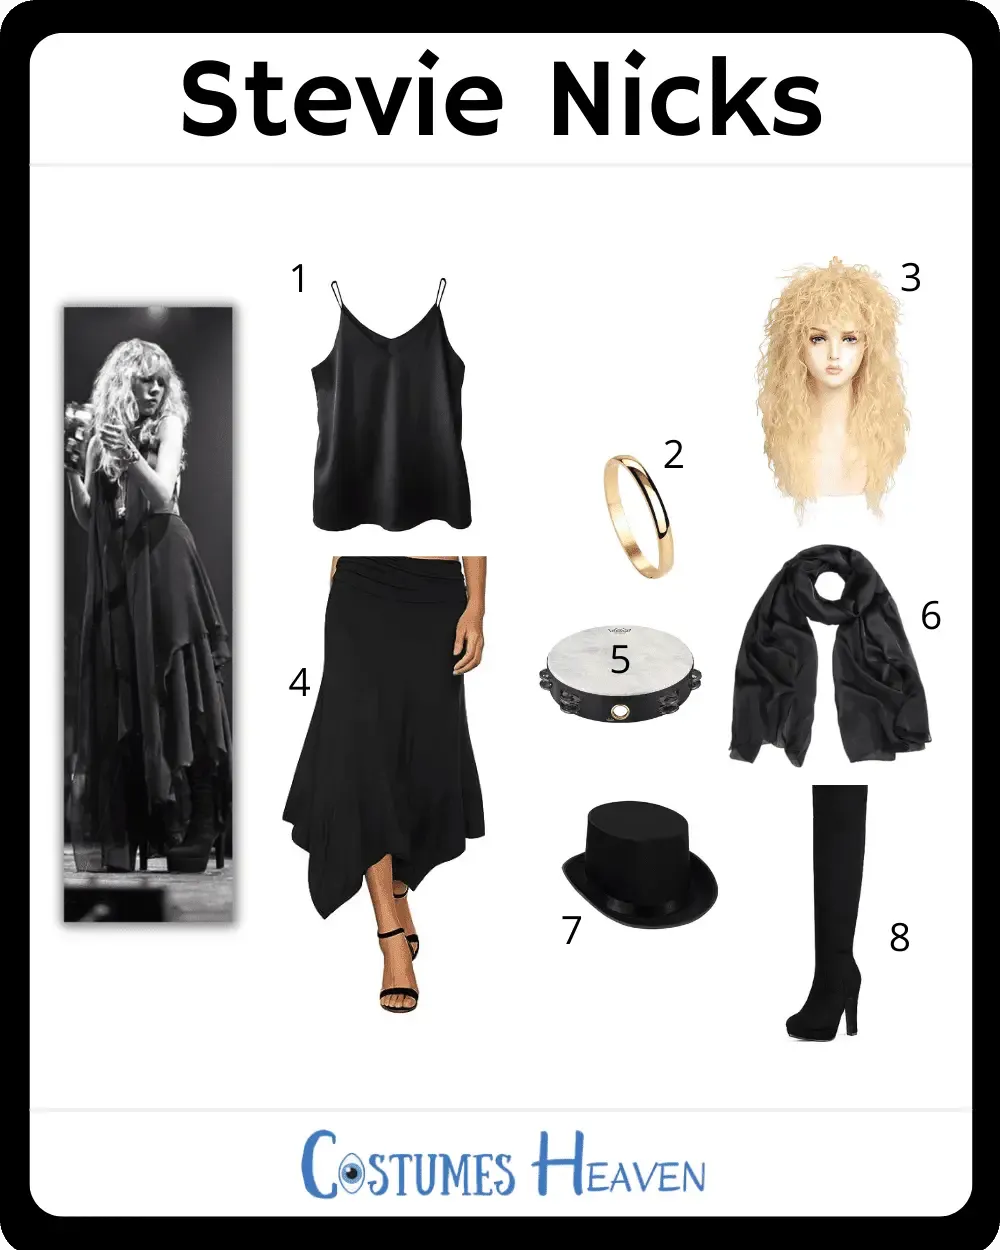 Stevie Nicks Costume